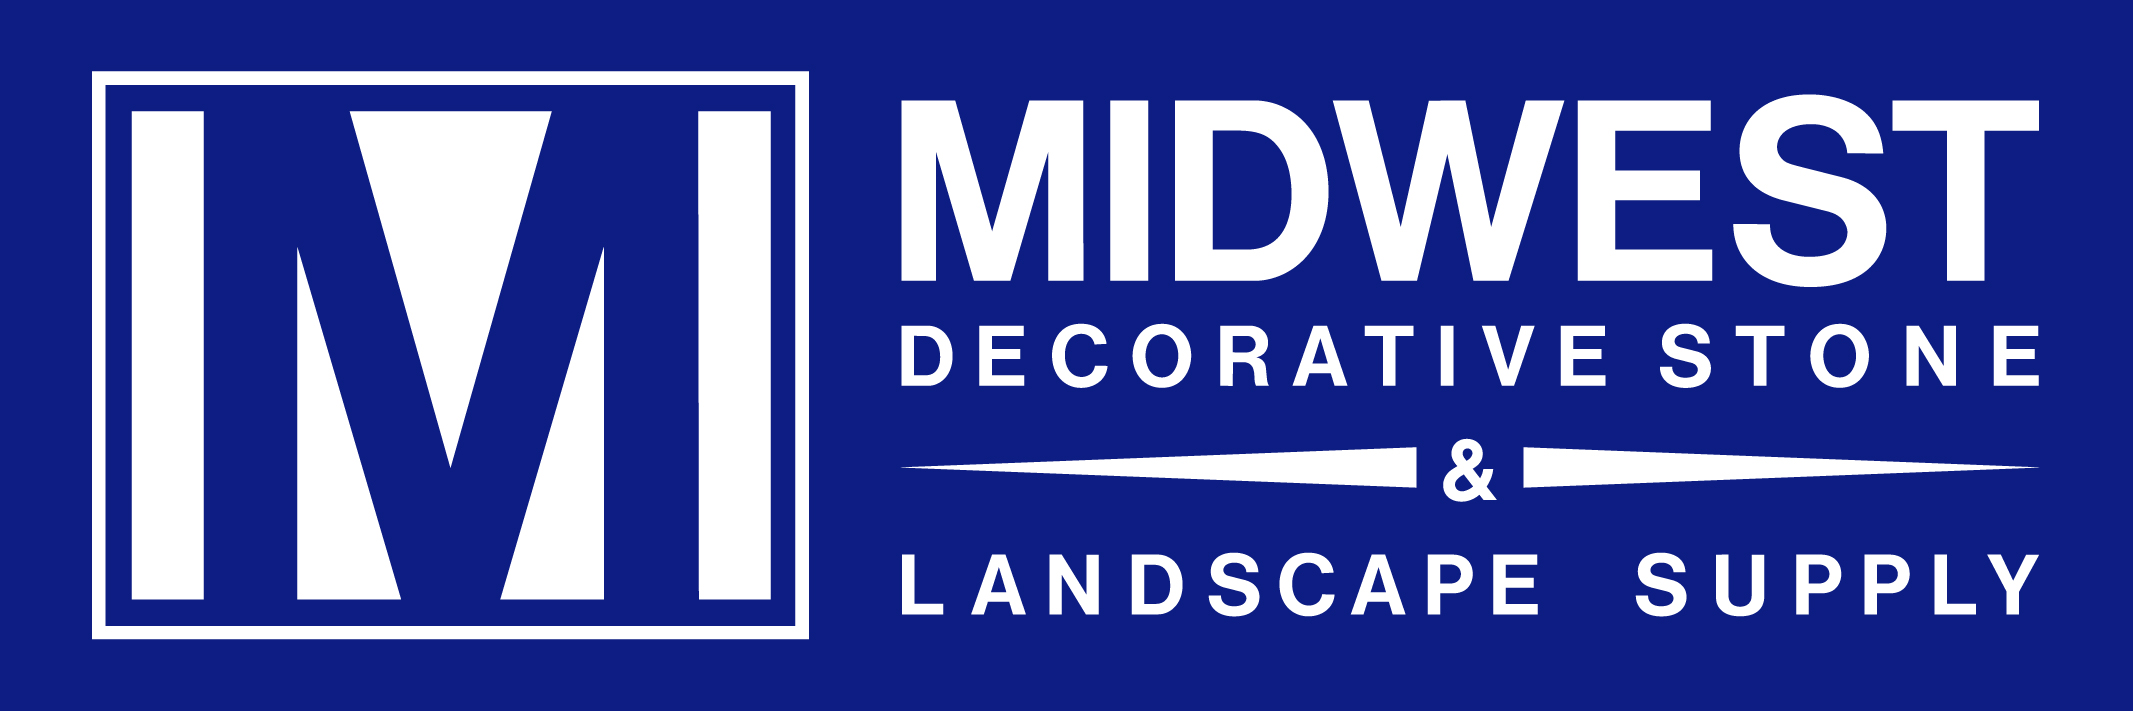 Midwest Decorative Stone & Landscape Supply